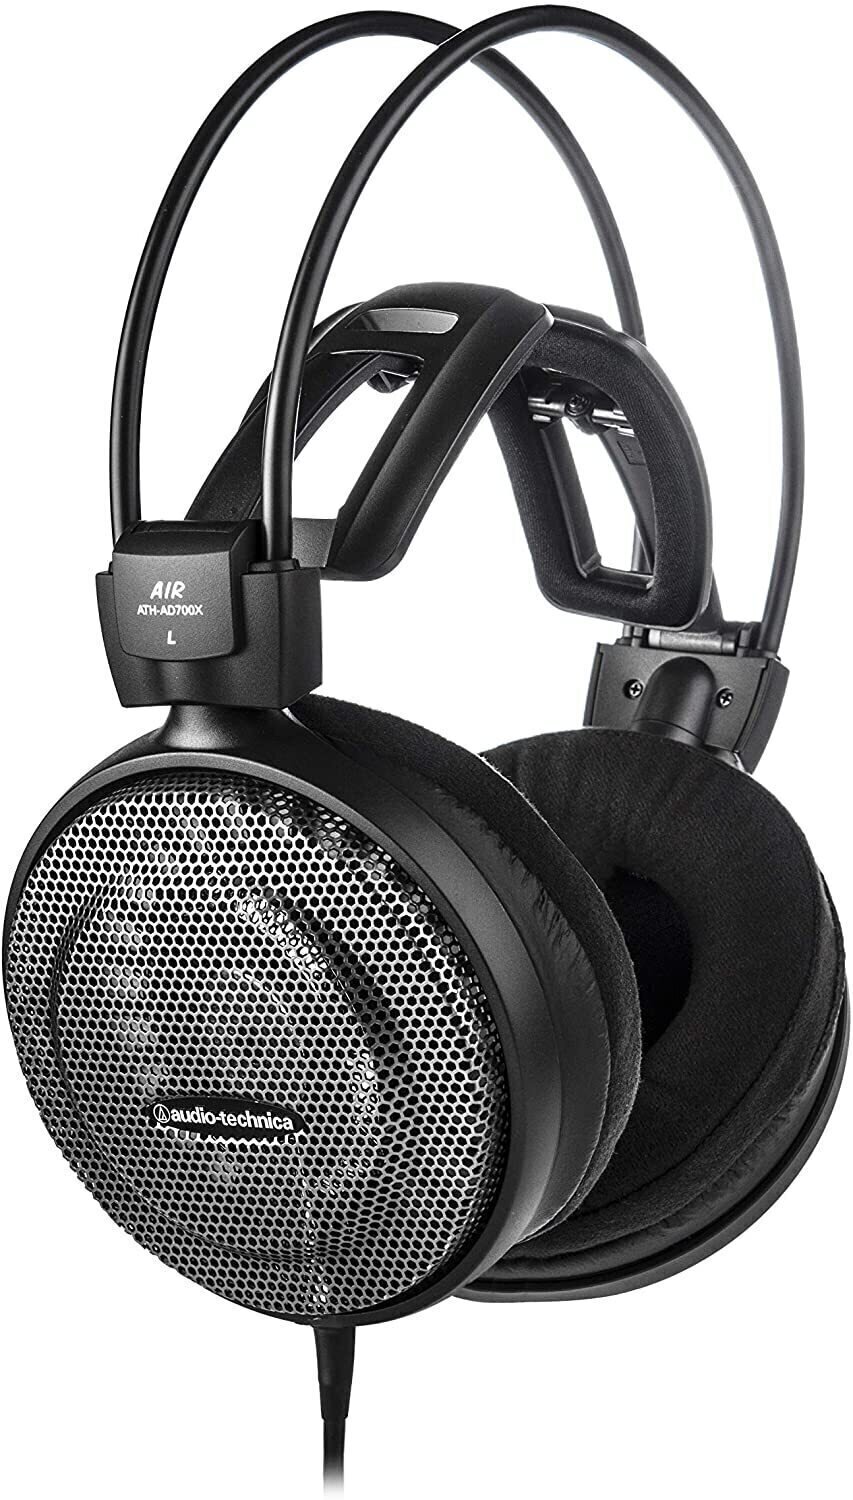 Hi-Fi Headphones Audio-Technica ATH-AD700X